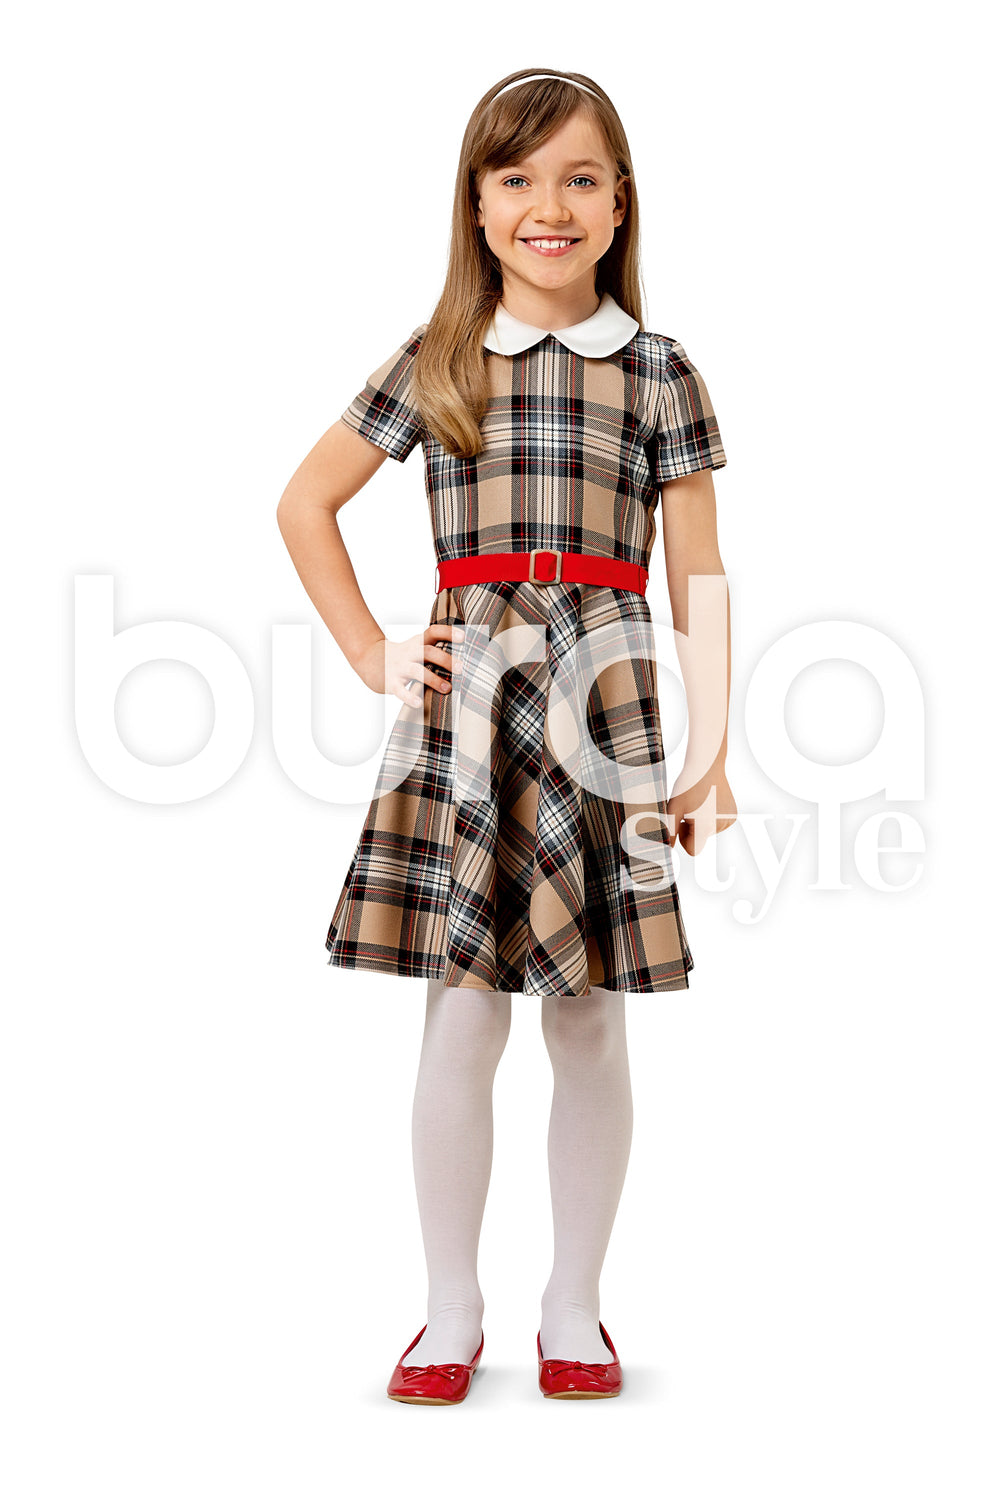 Burda 9379 Girl's Dress pattern from Jaycotts Sewing Supplies